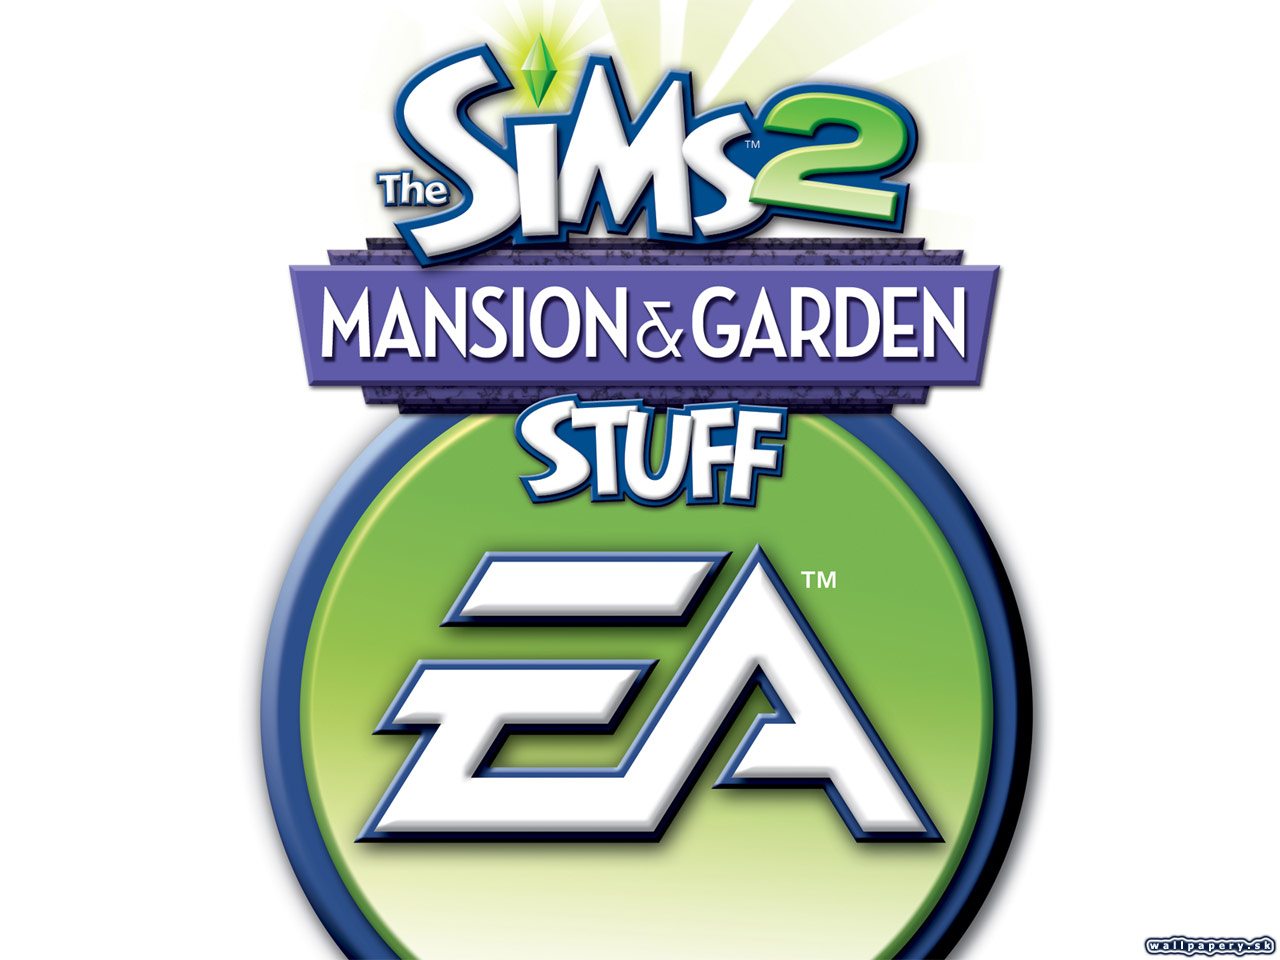 The Sims 2: Mansion & Garden Stuff - wallpaper 2